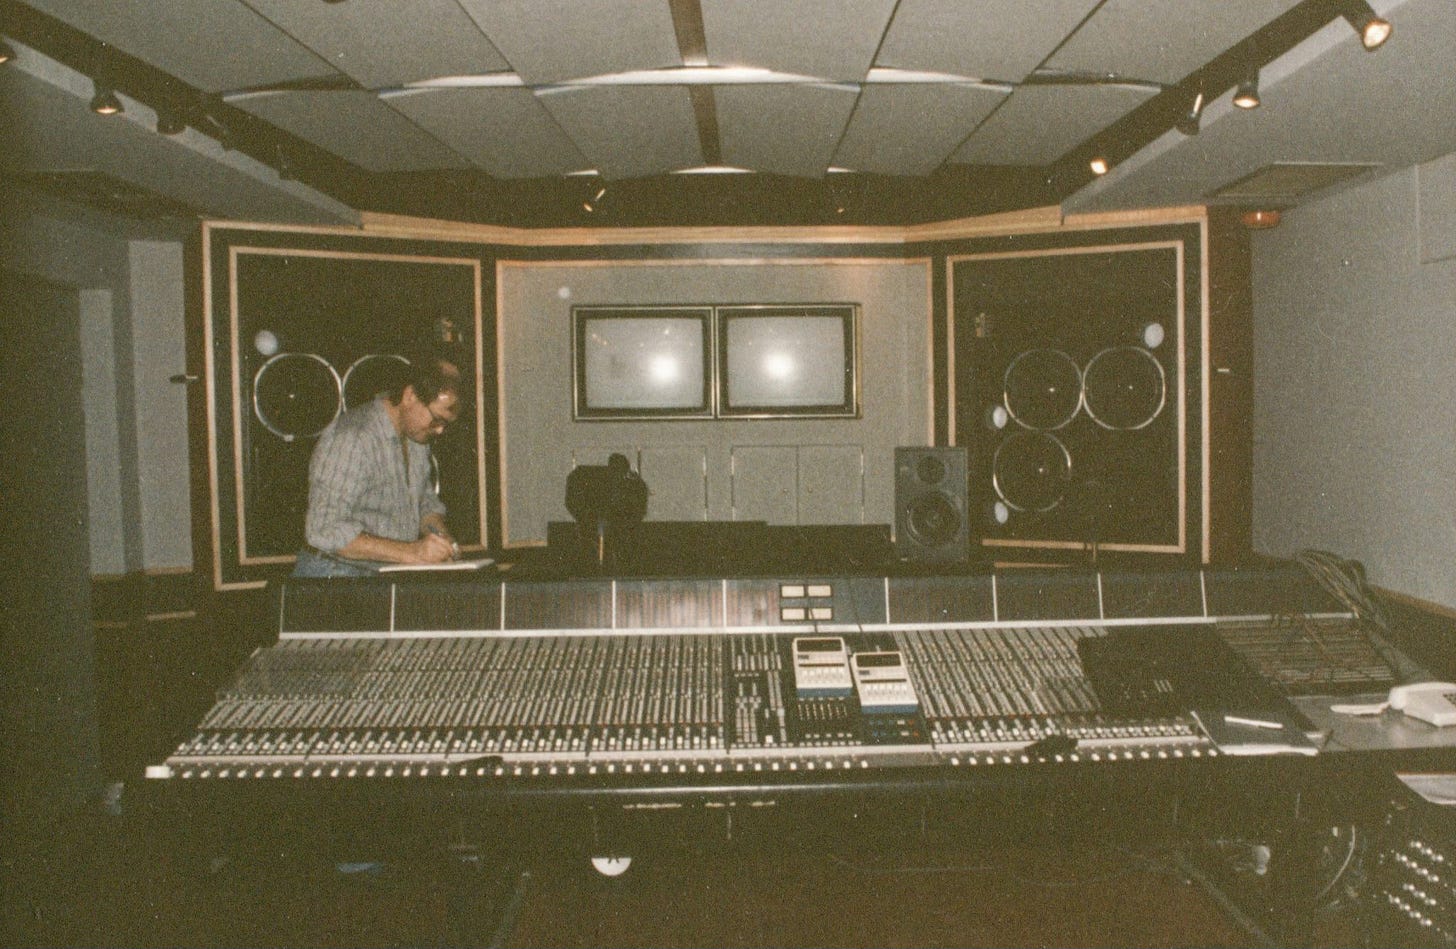 Abbey Road Studio 2 control room circa 1981